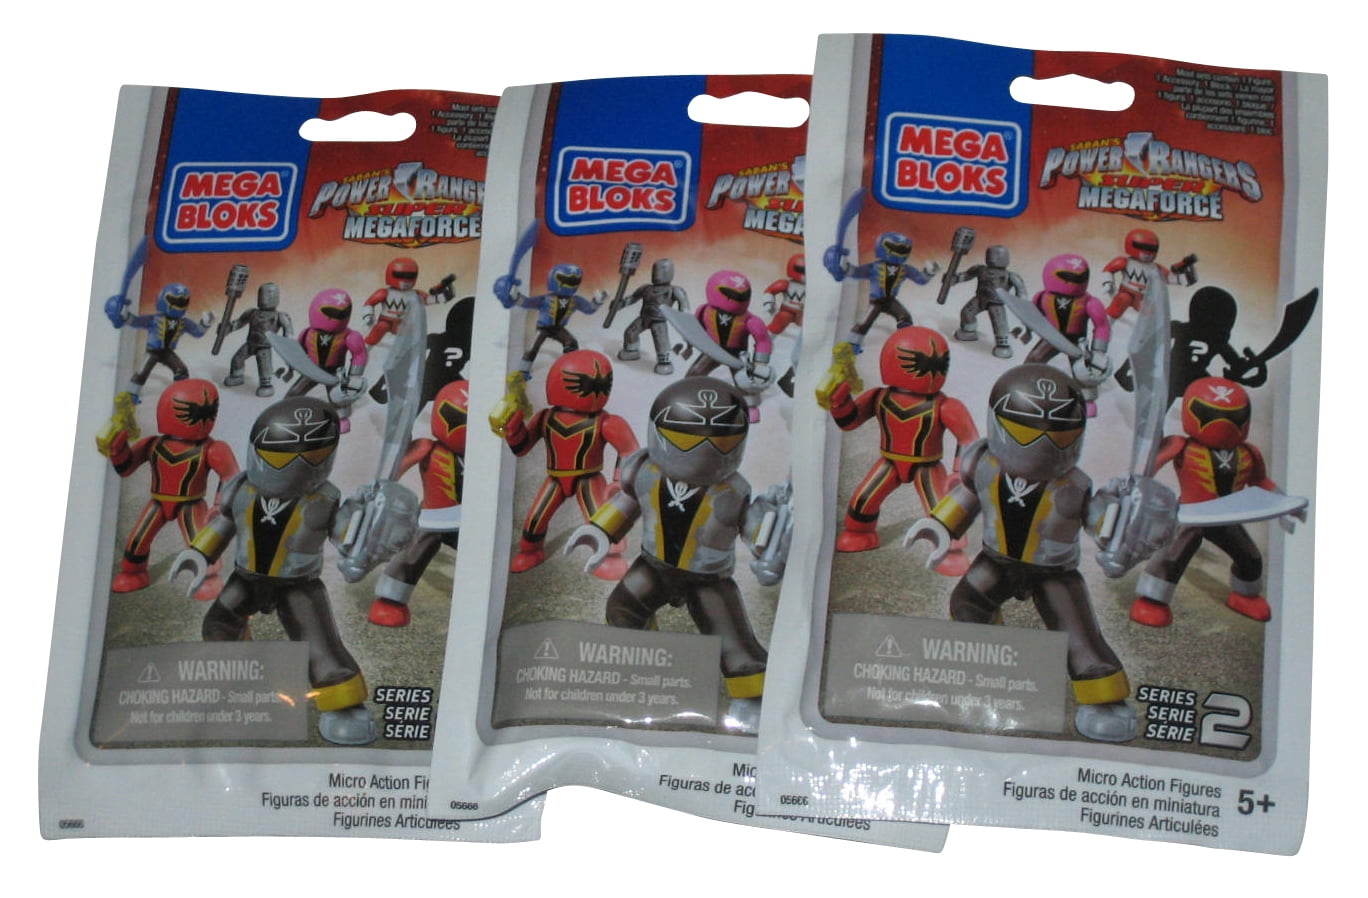 LOT of 4 Mega Bloks Power Rangers SUPER Megaforce Series 1 2 Micro Mini Figures 